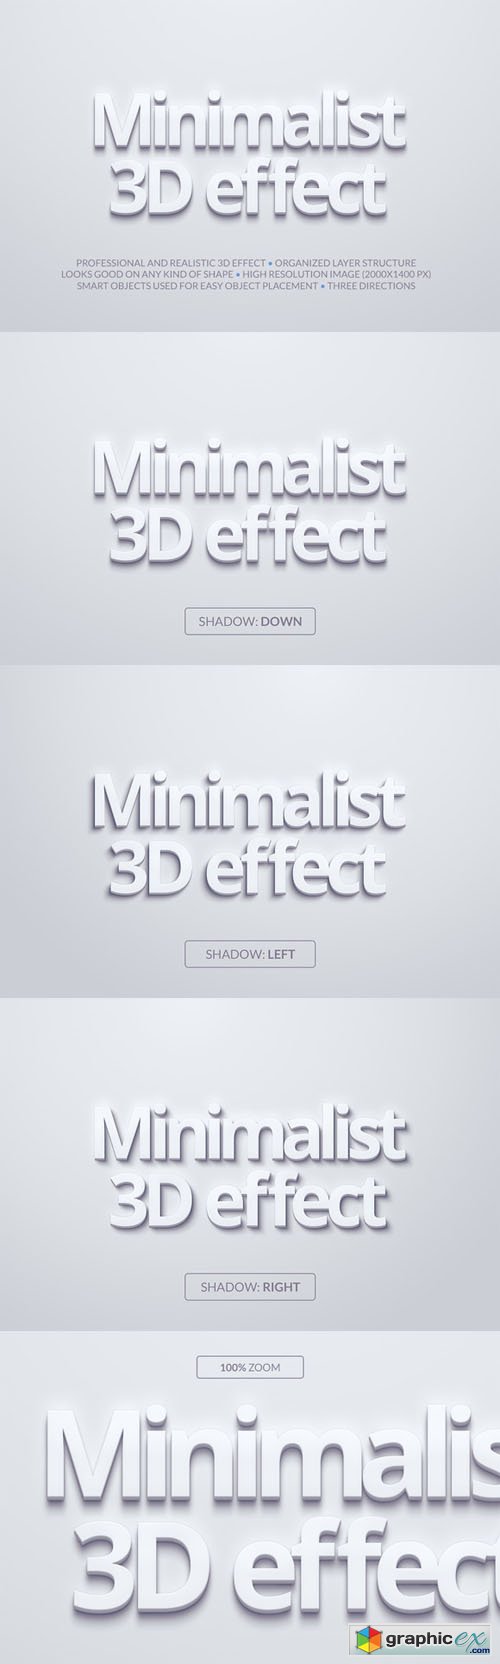 Minimalist 3D Effect